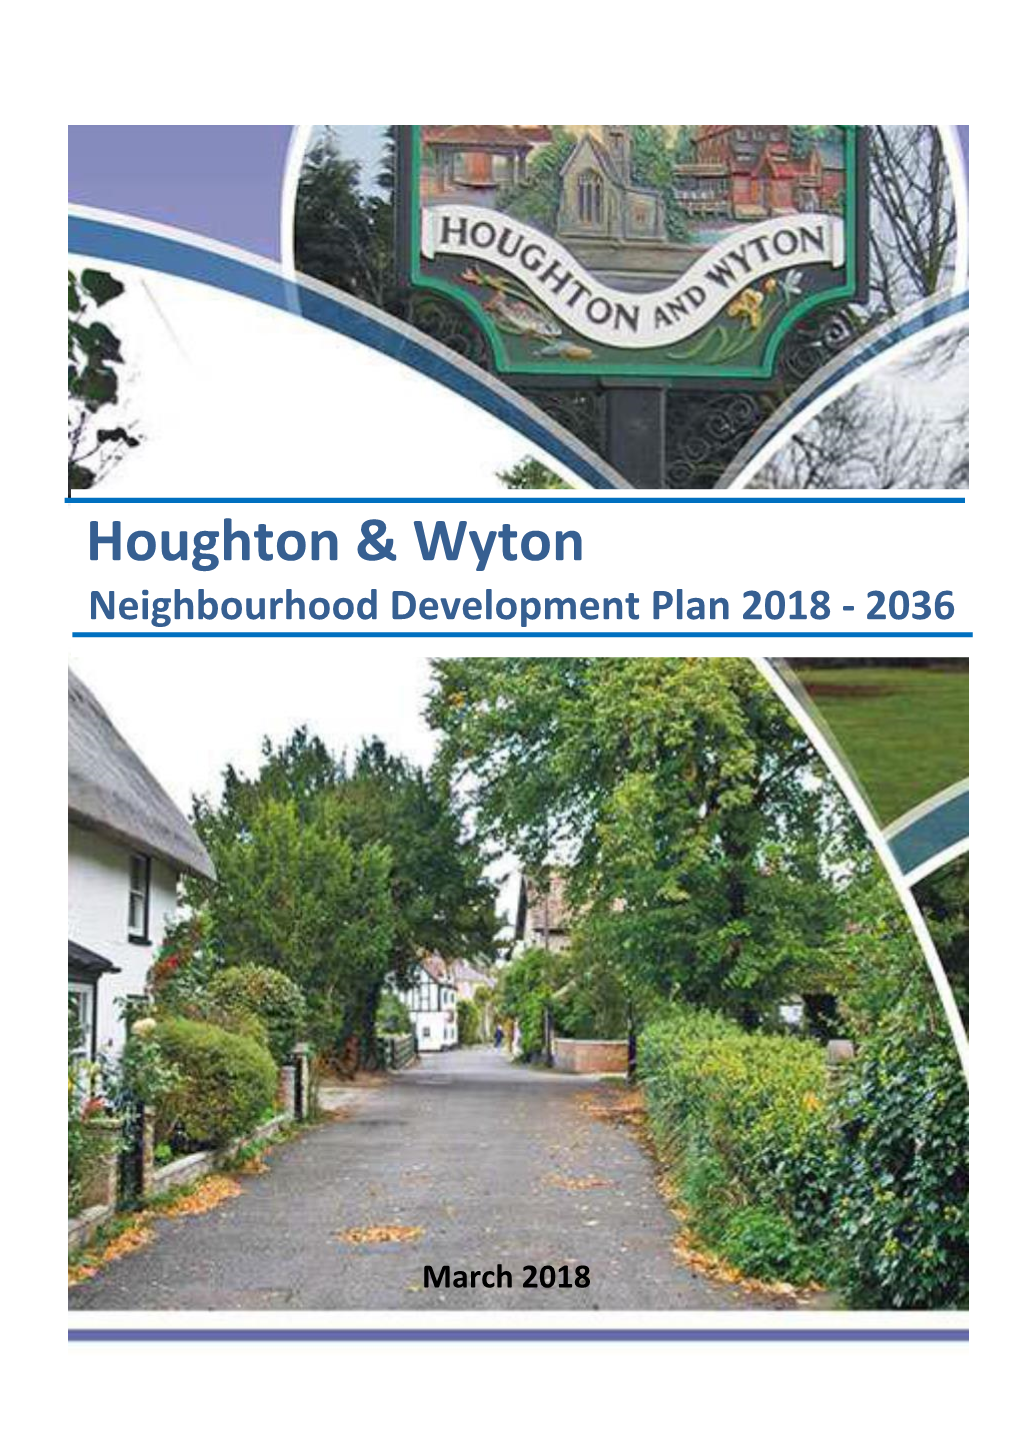 Houghton and Wyton Neighbourhood Plan 2018-2036